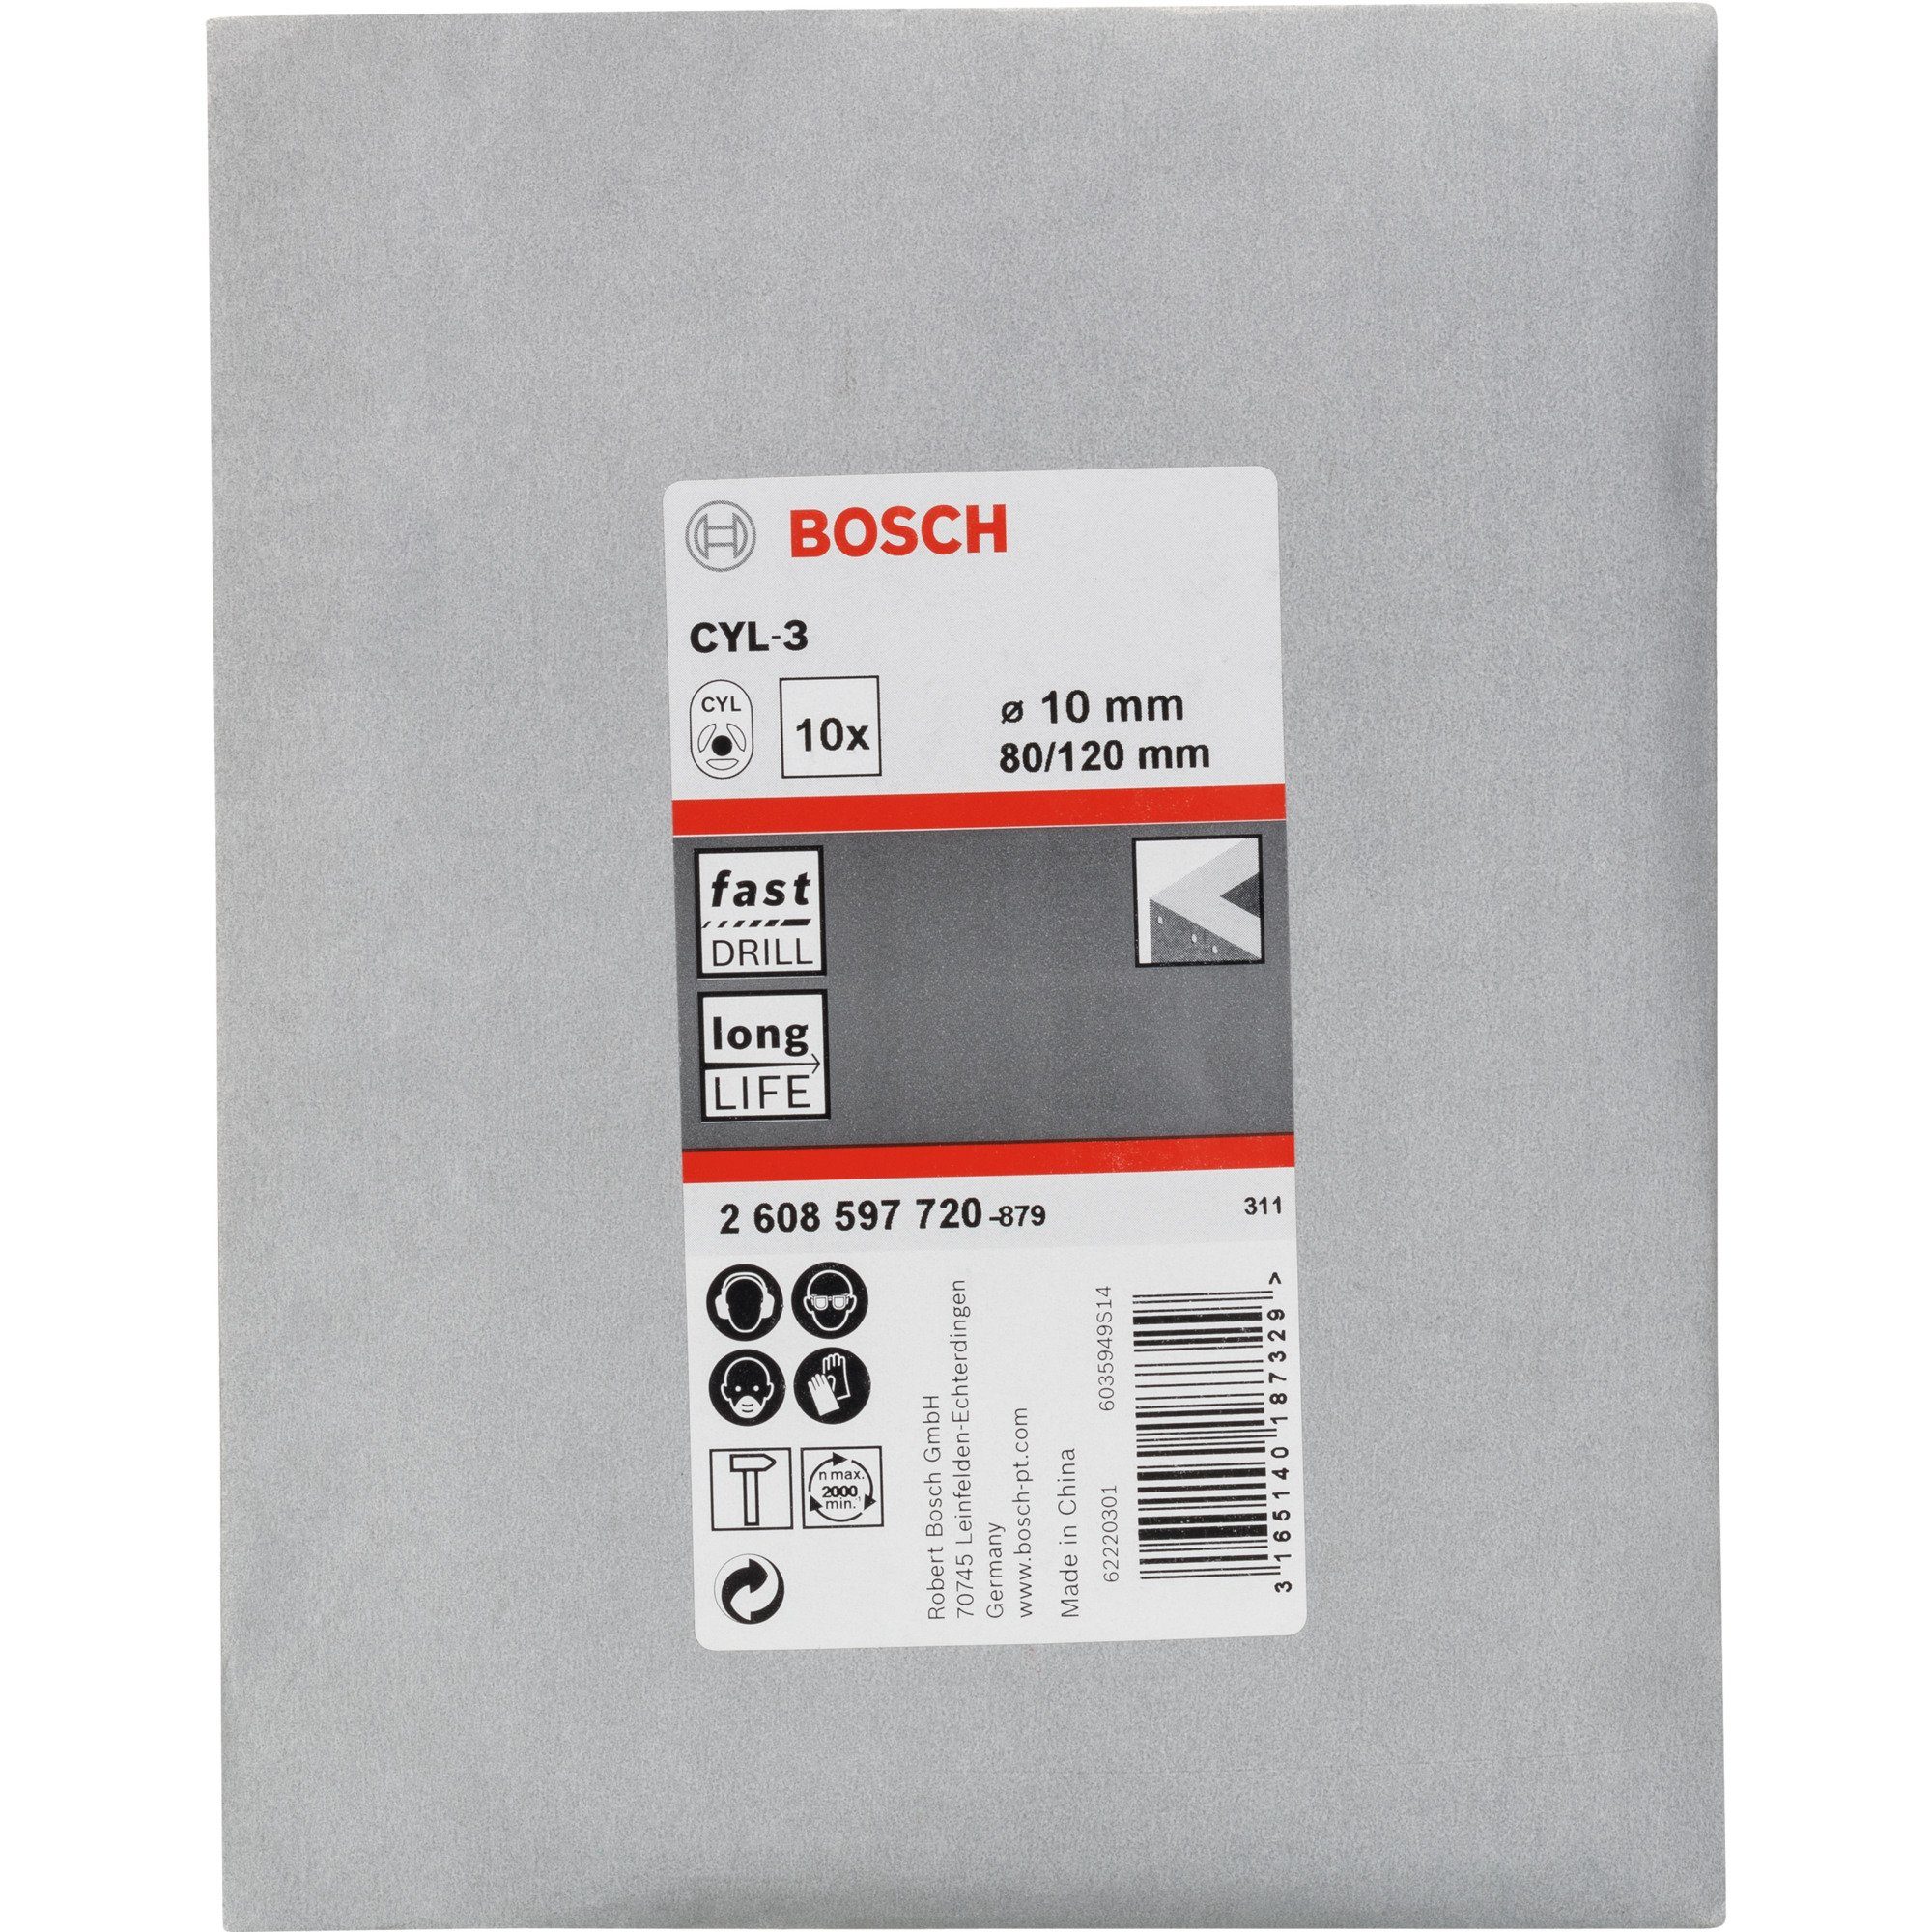 BOSCH und Ø Professional Betonbohrer Bosch 10mm Bitset CYL-3, Bohrer-